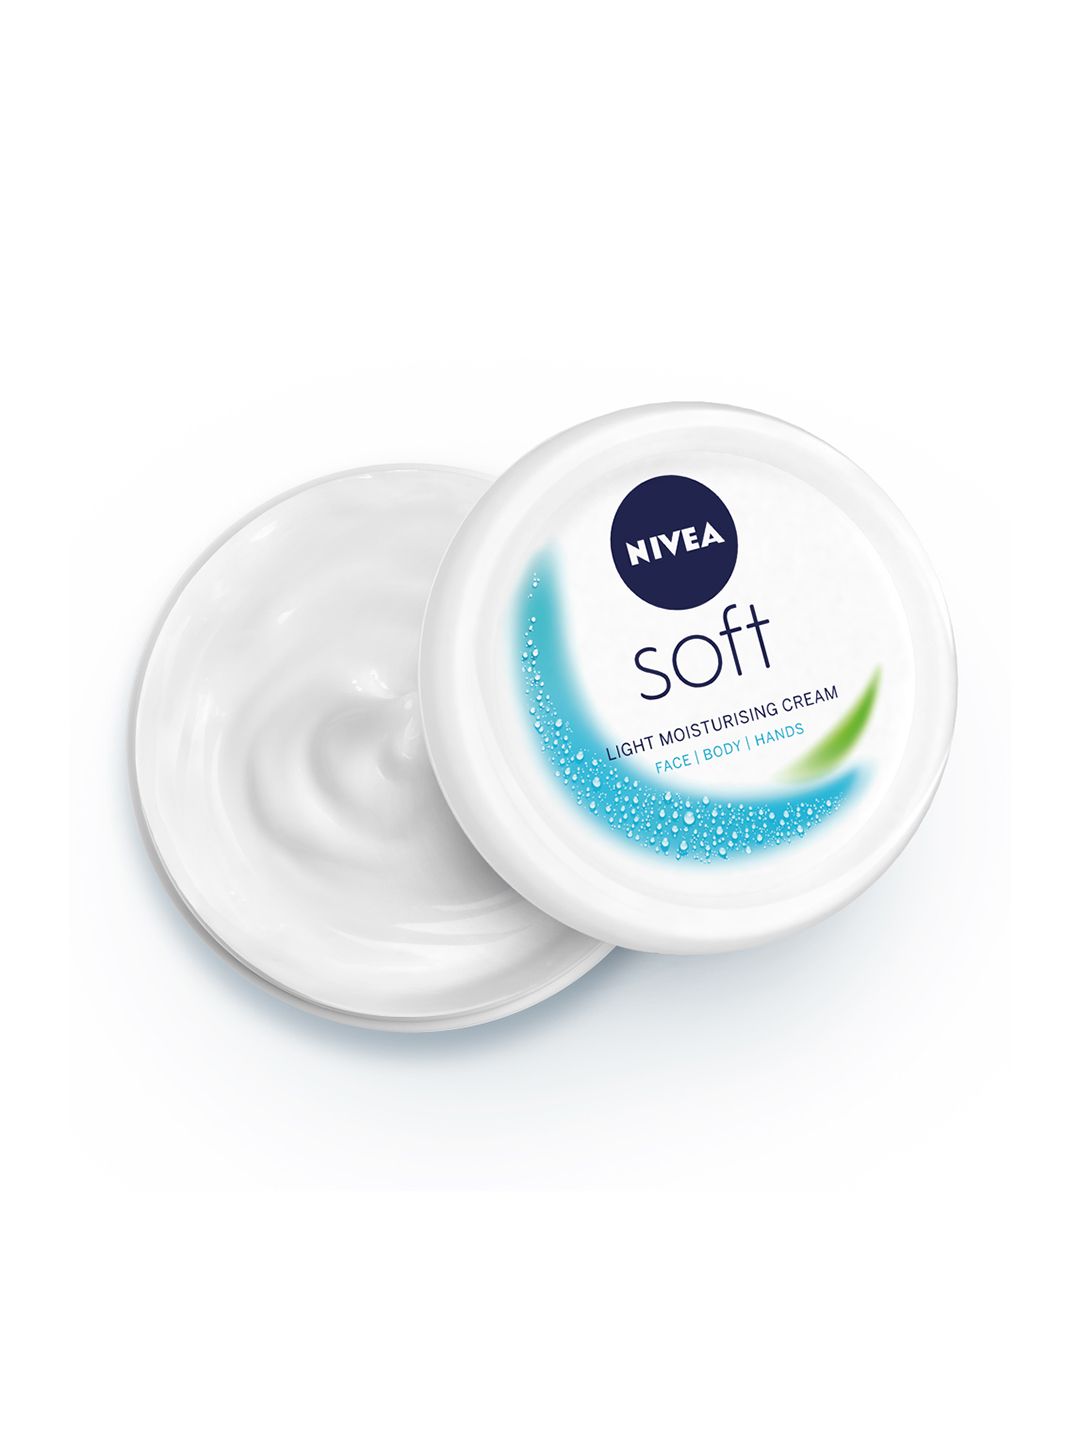 Nivea Soft Light Moisturizer for Face & Body with Vitamin E & Jojoba Oil - 50ml